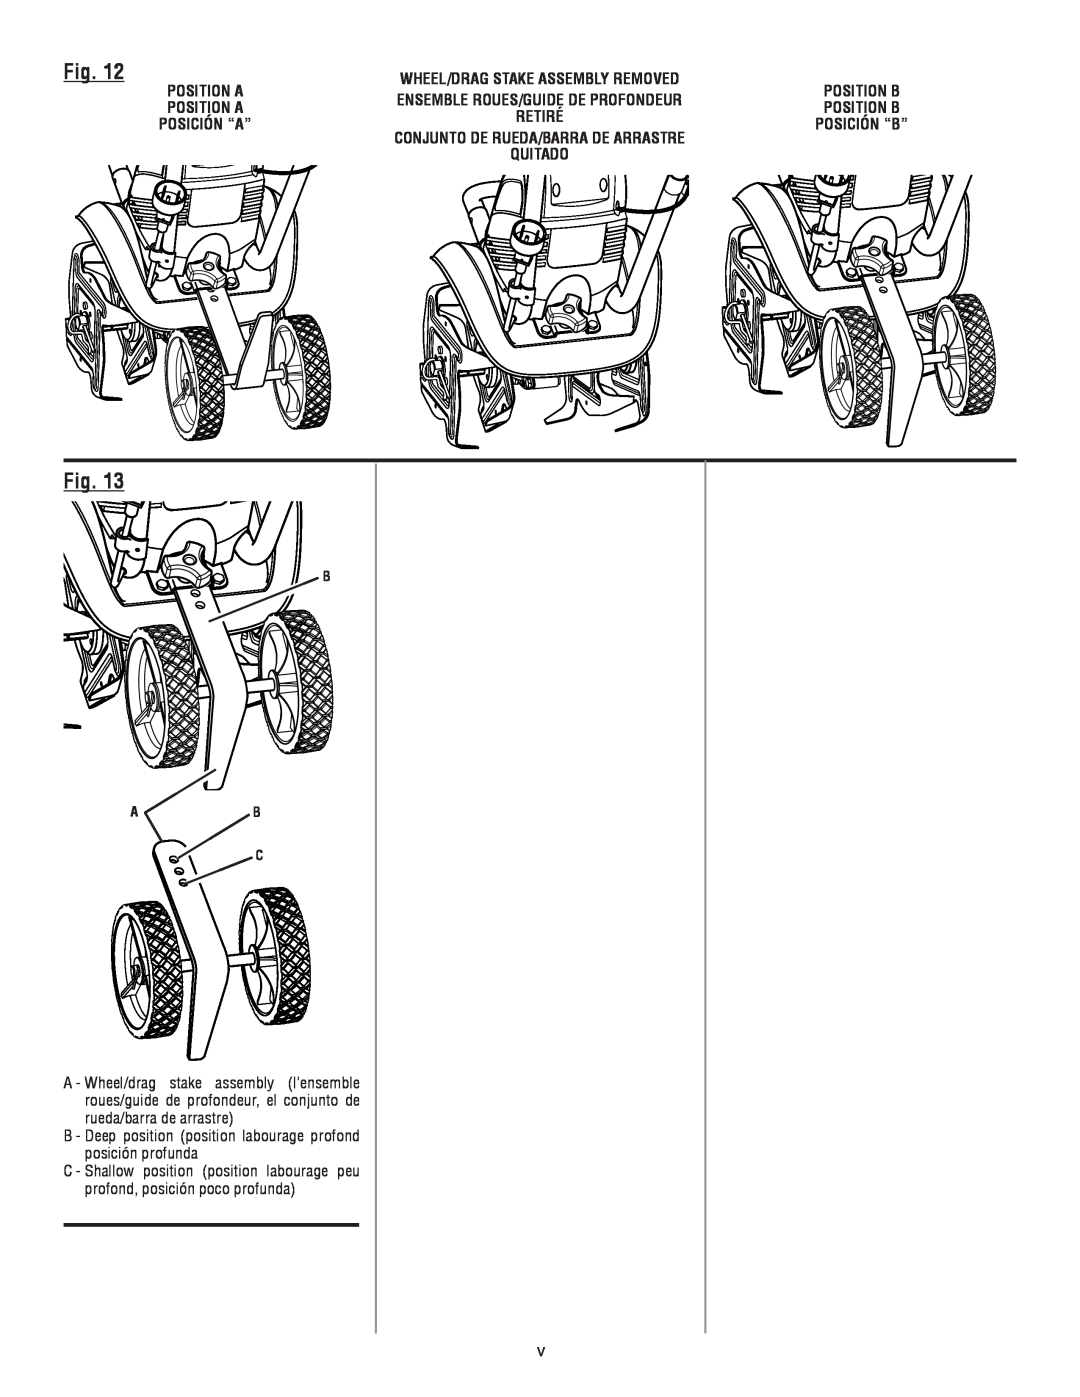 Homelite UT46510 manuel dutilisation position a position a POSICIÓN “A”, wheel/Drag stake ­assembly removed 